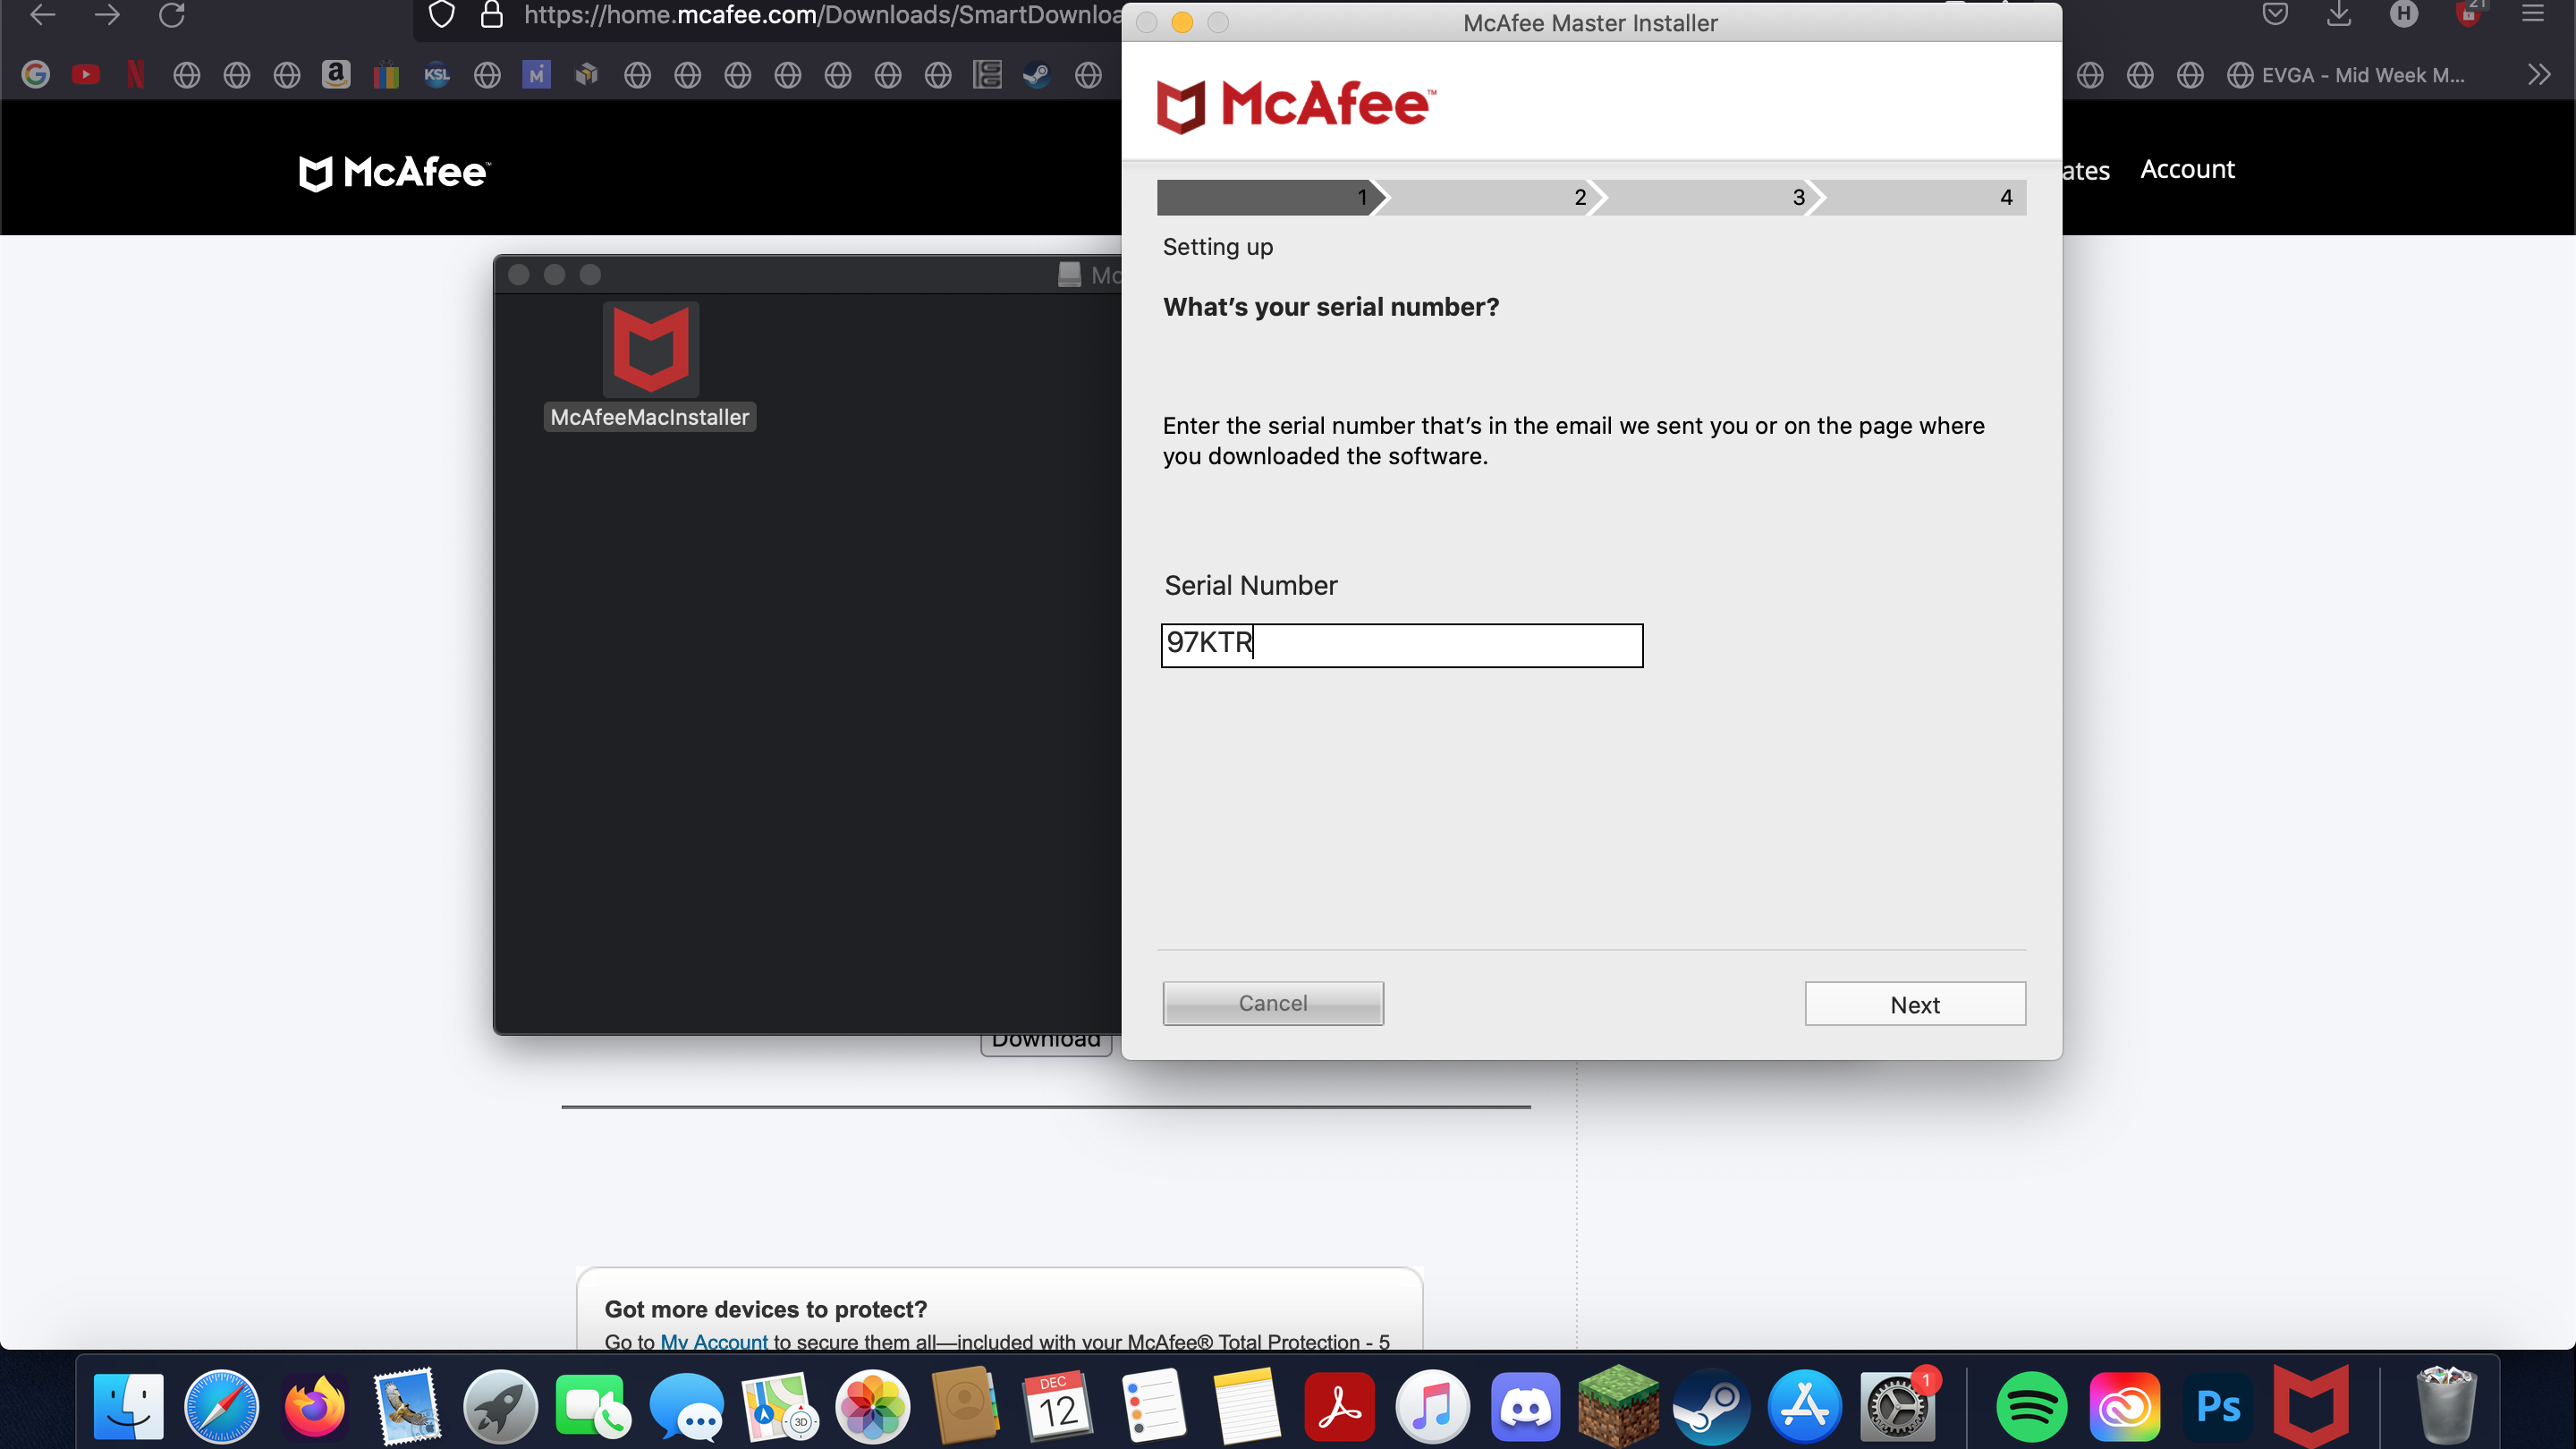 McAfee Installer enter the serial number